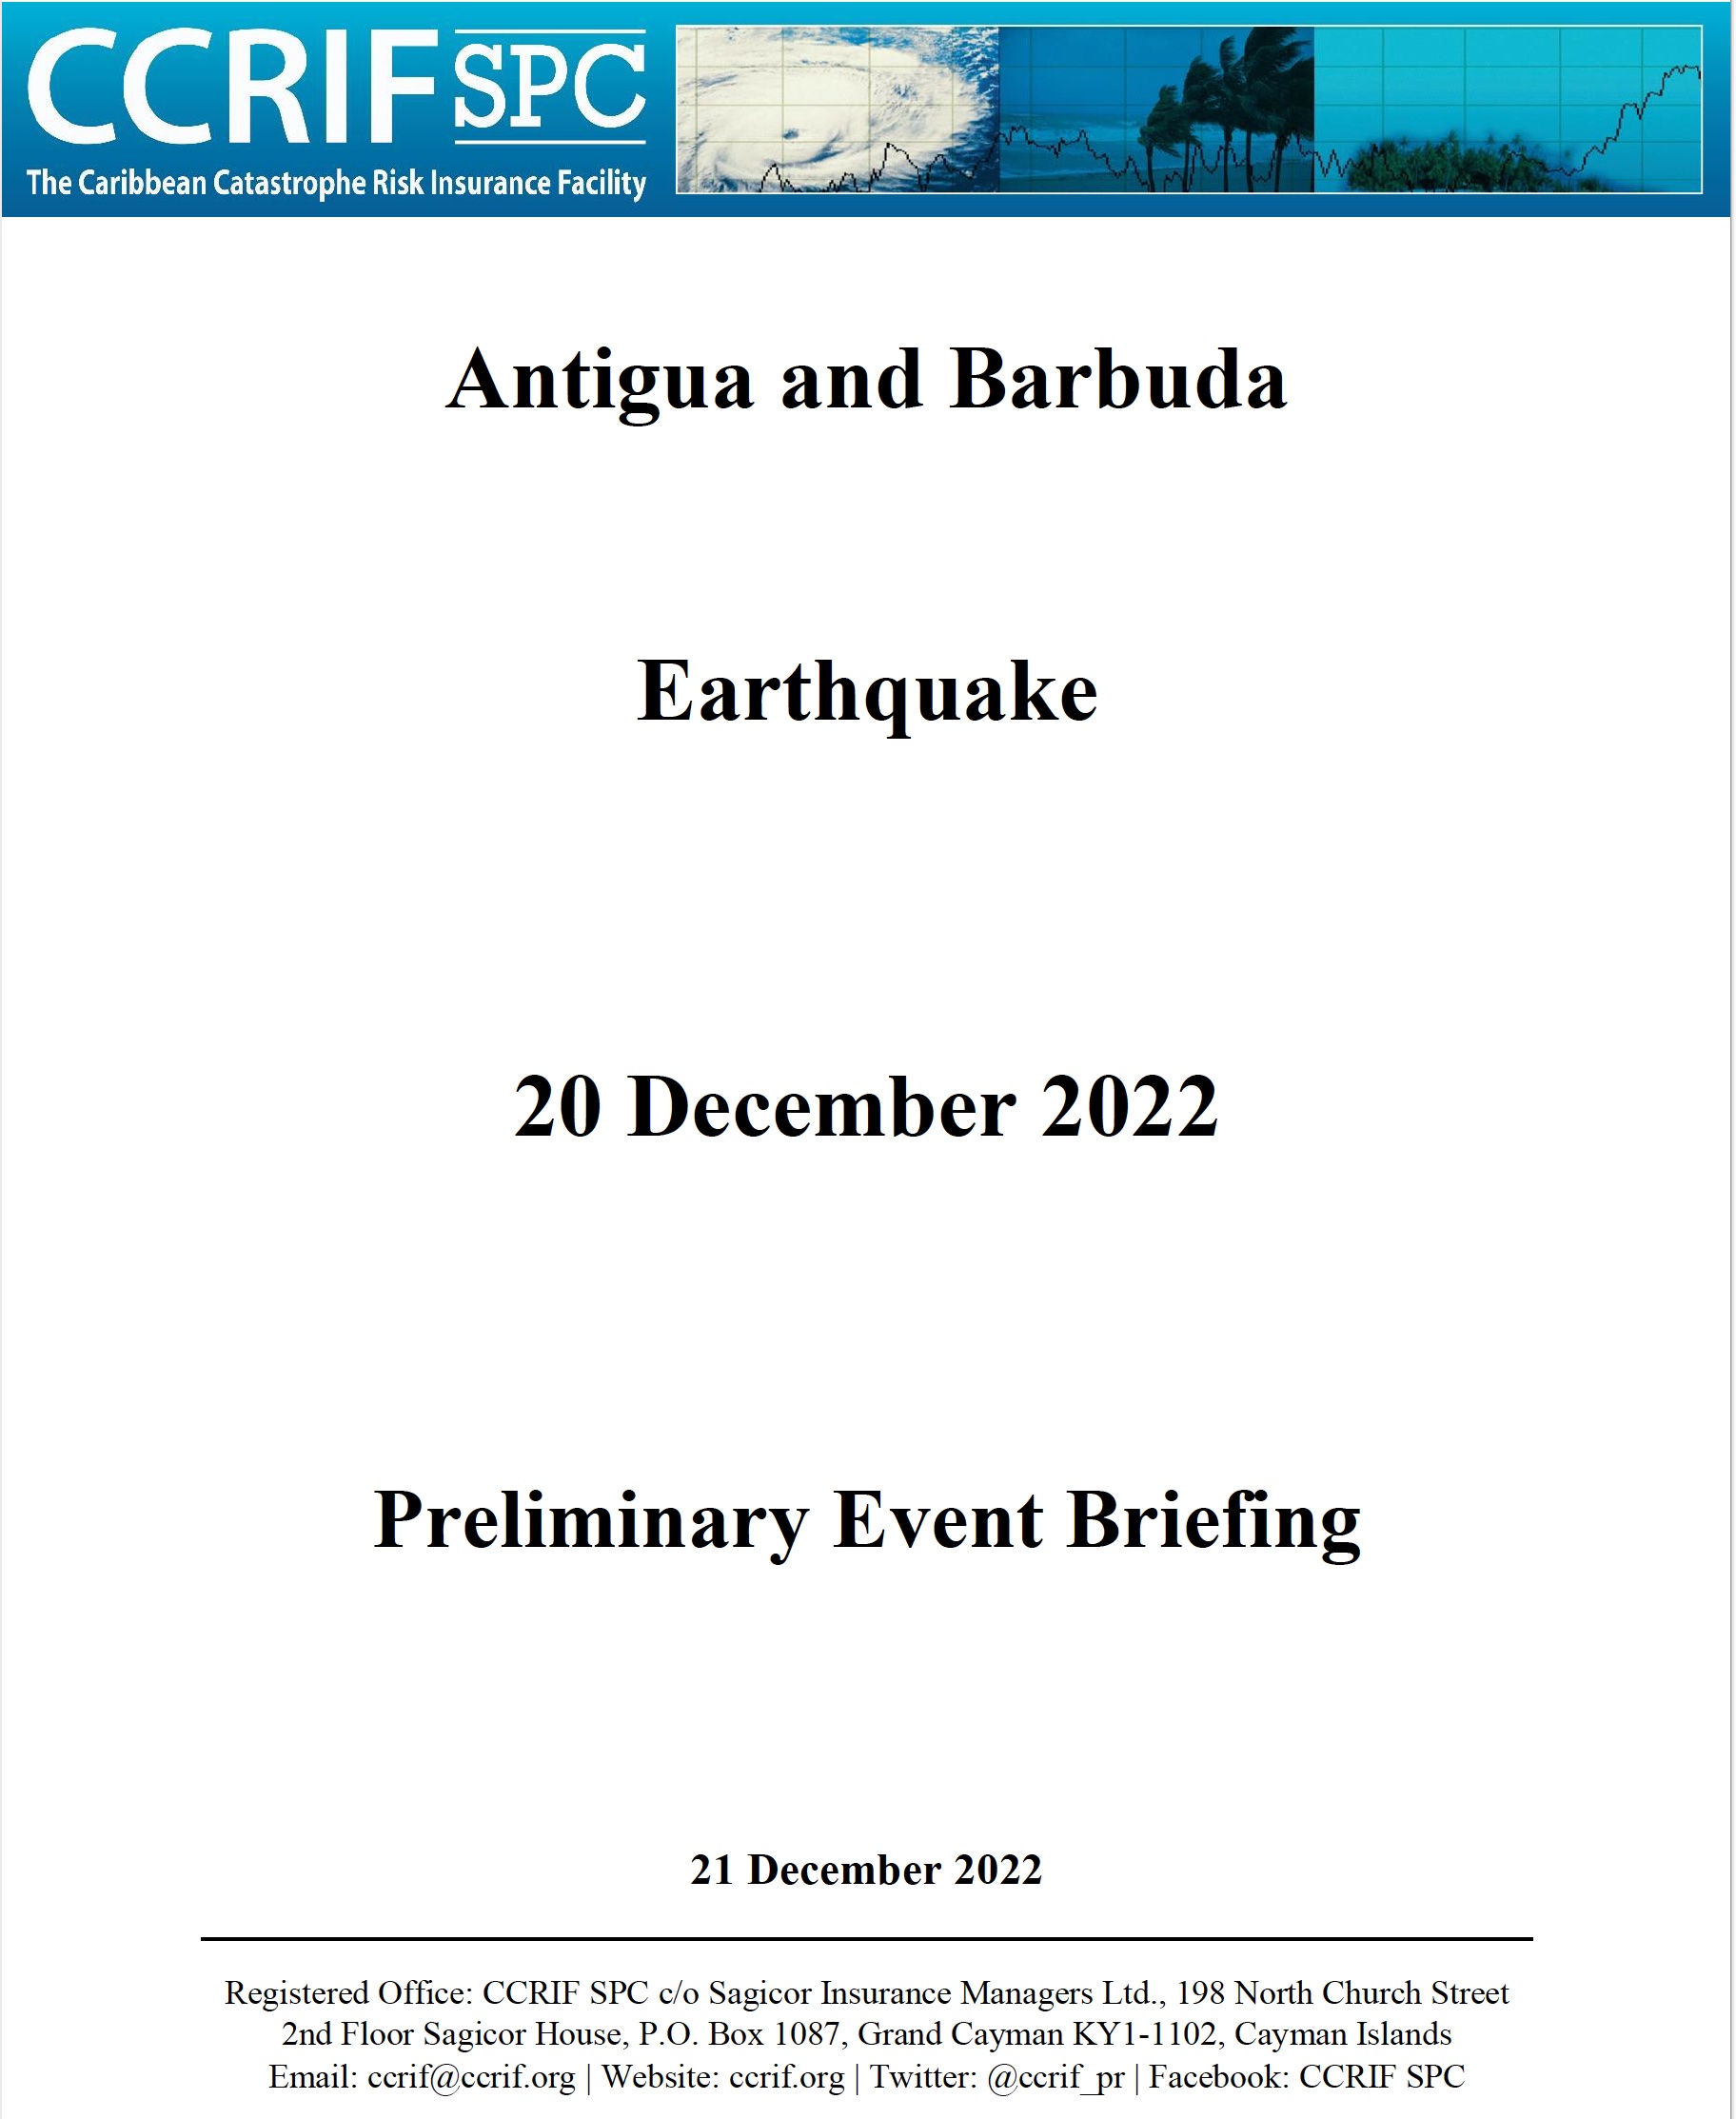 Preliminary Event Briefing - Earthquake - Antigua and Barbuda - December 20 2022